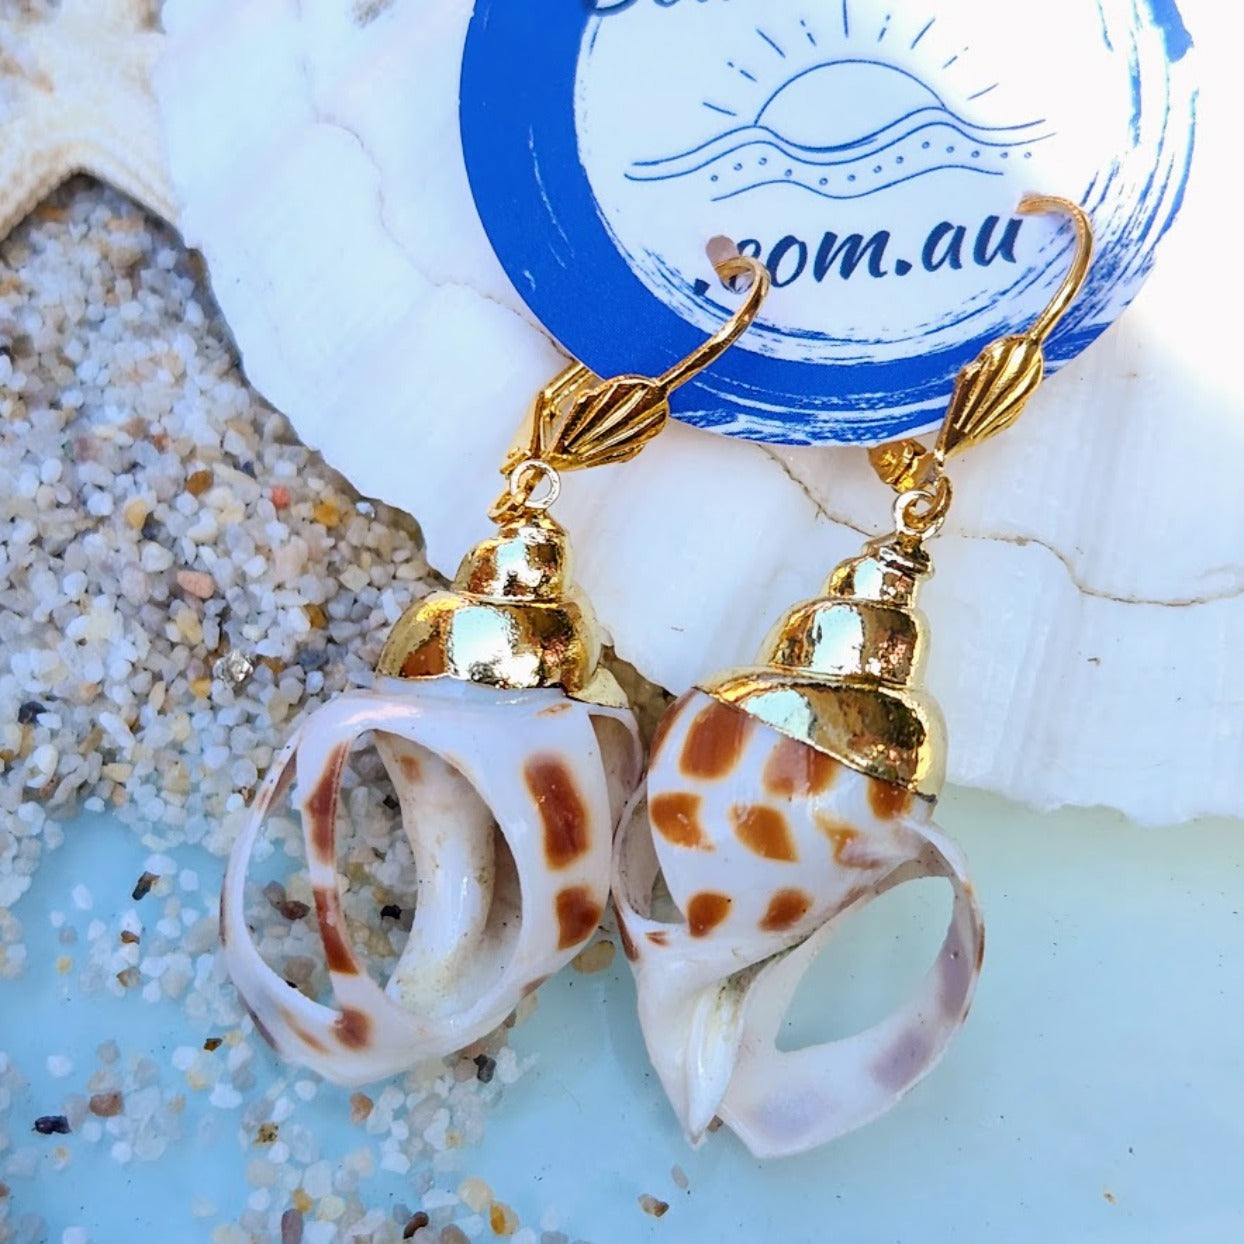 SPECKLED SHELLS - GOLD HOOK BOHO EARRINGS - Premium earrings from www.beachboho.com.au - Just $35! Shop now at www.beachboho.com.au